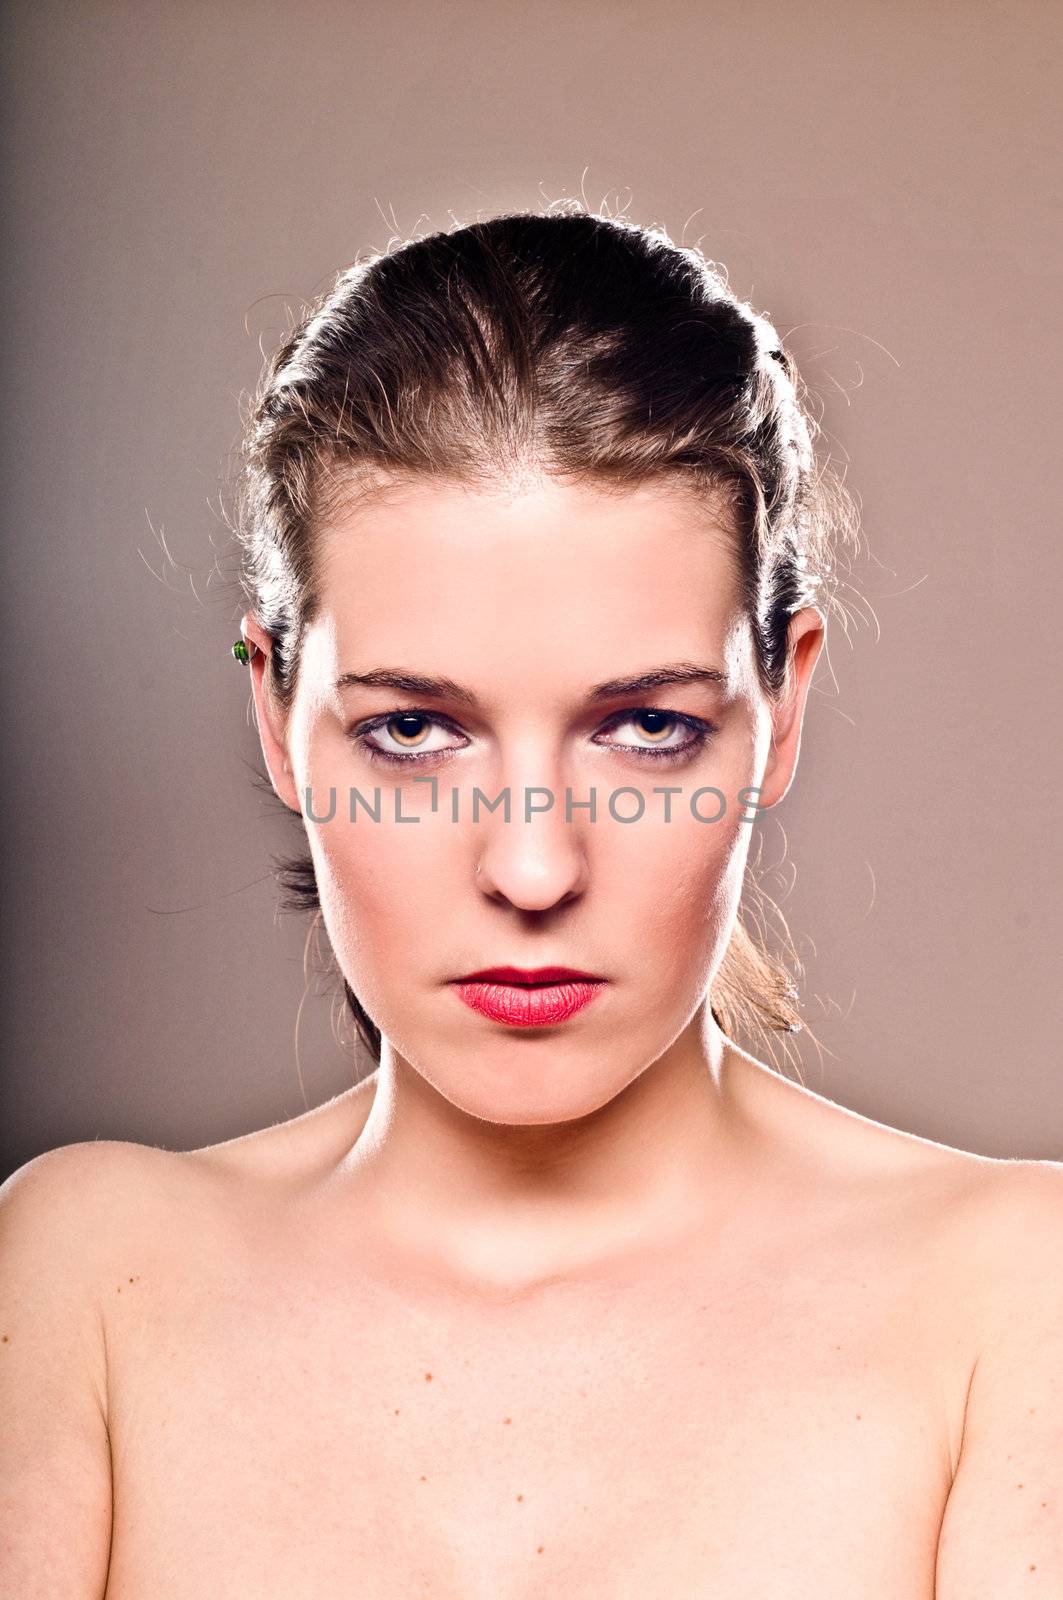 Portrait Of A Beautiful Woman by nfx702